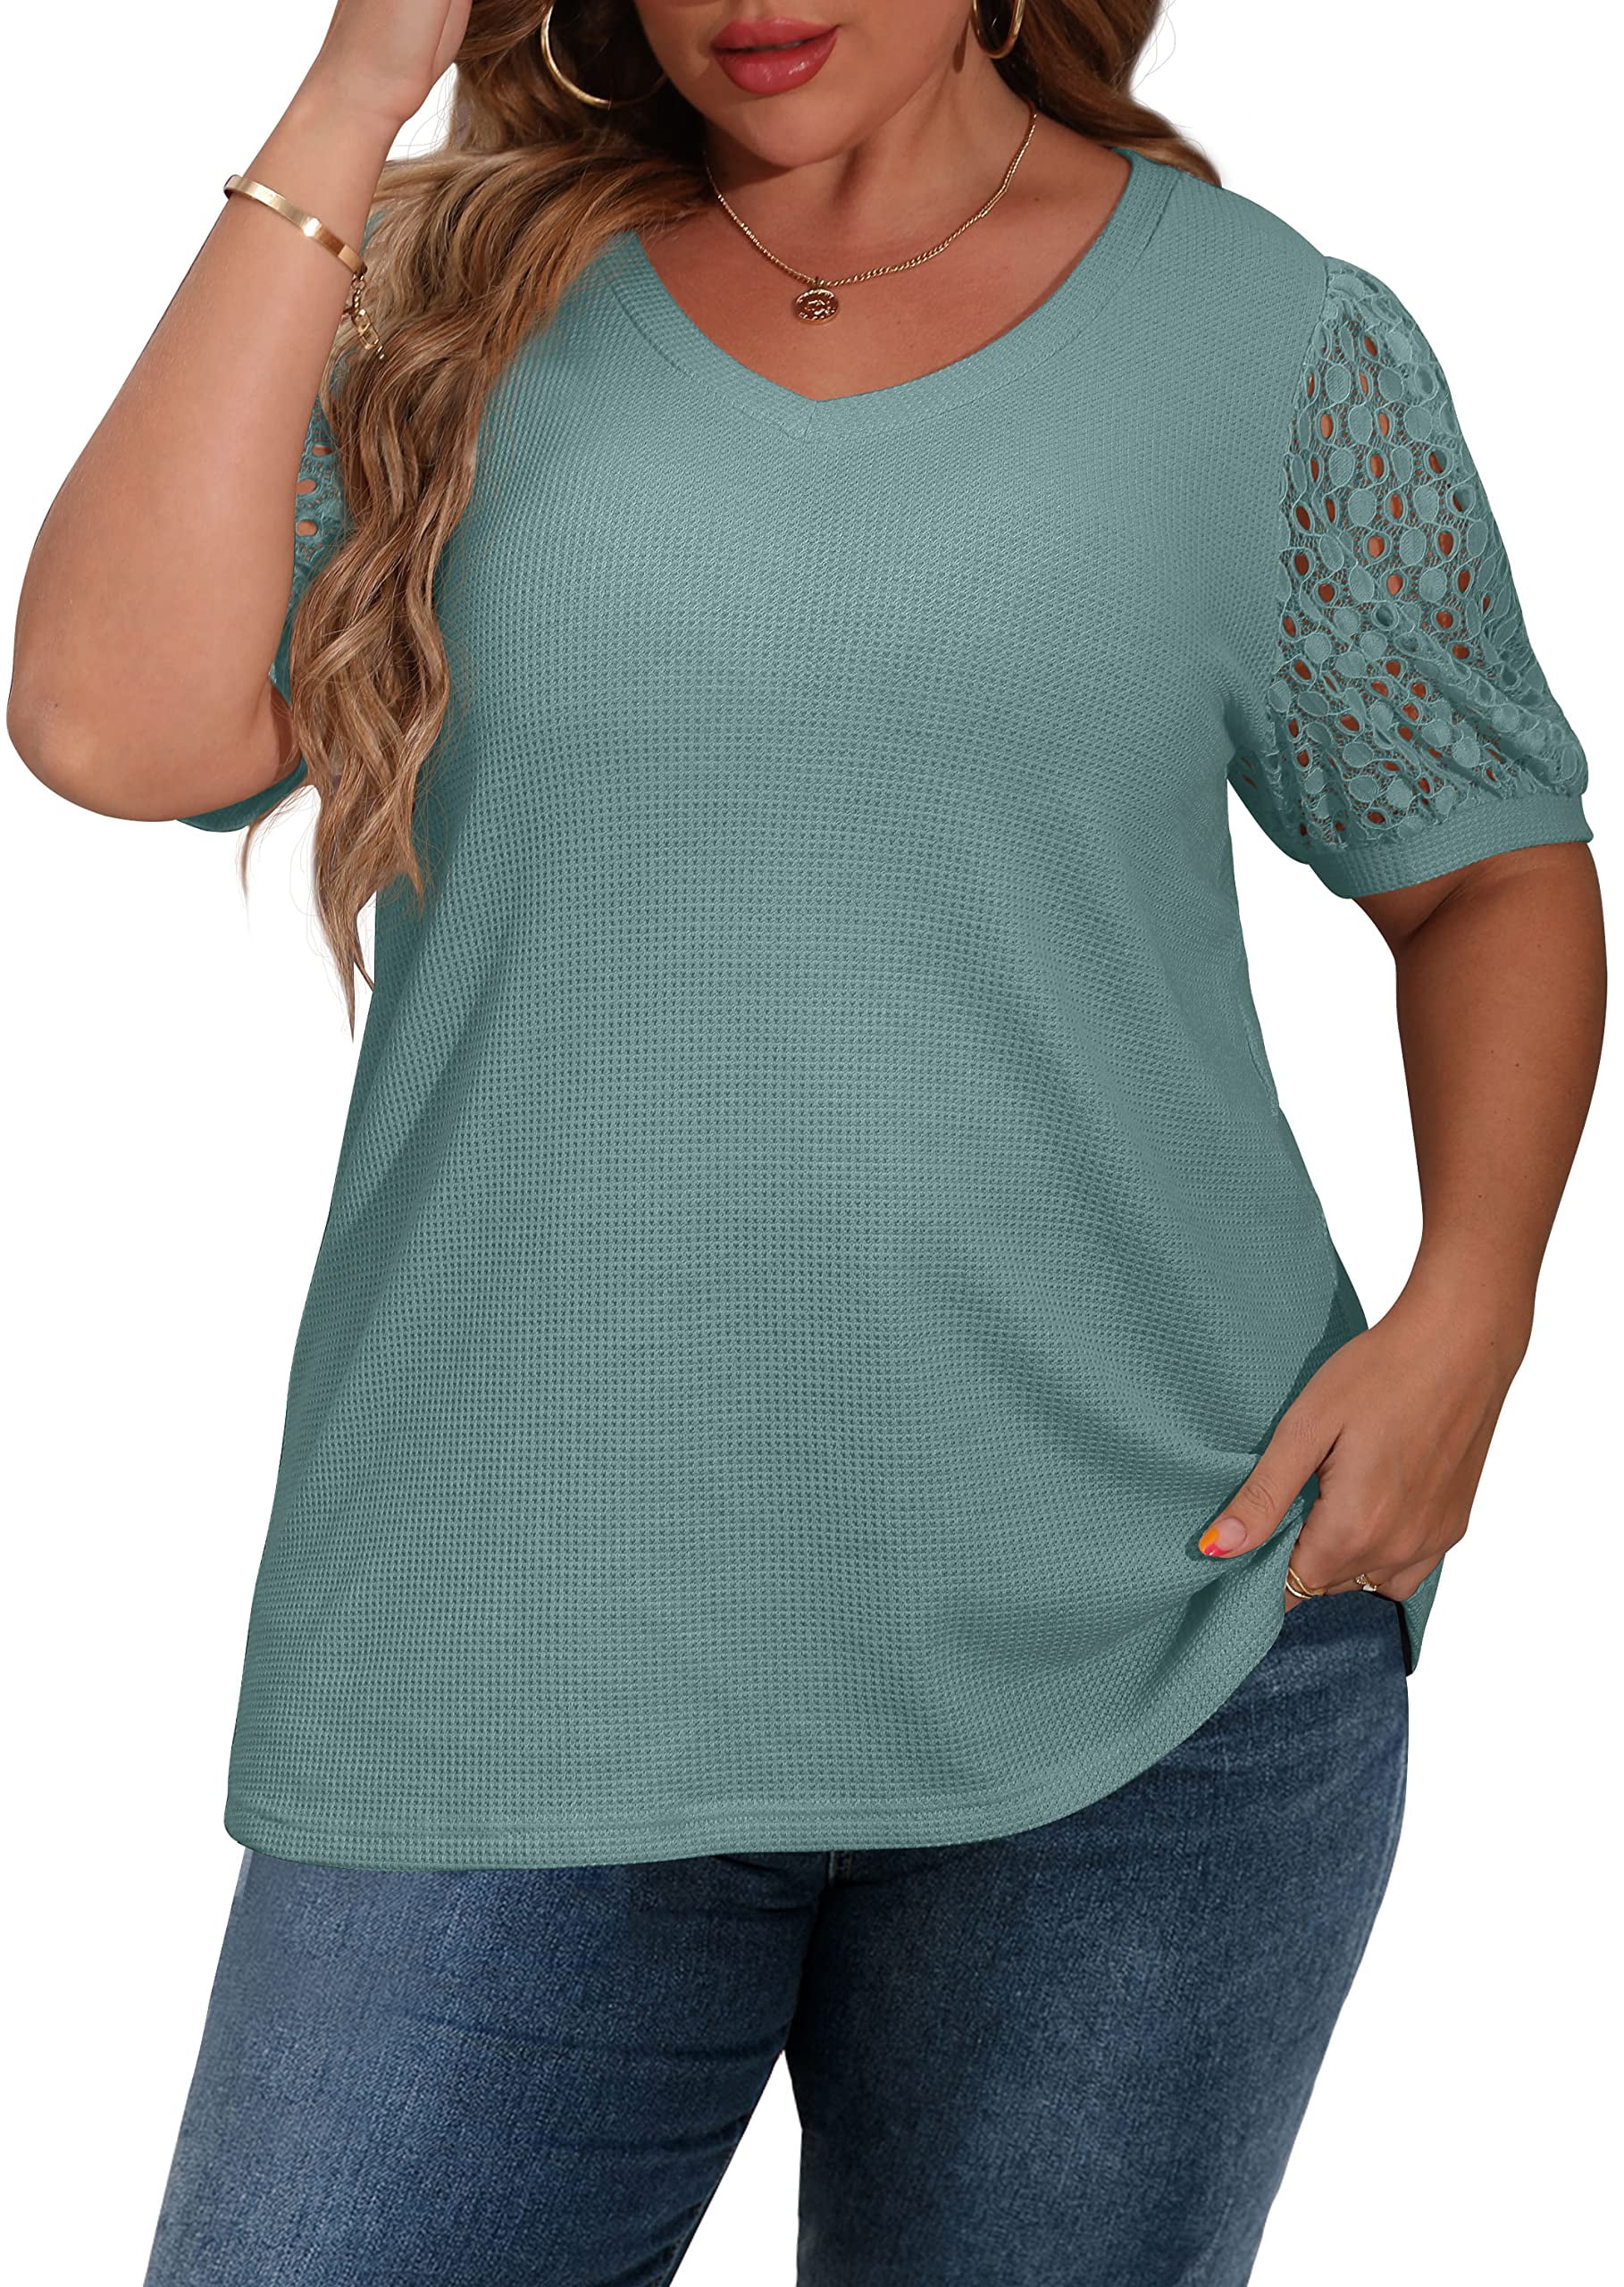 JWD Plus Size Tops For Women Summer Blouse Waffle Knit Short Lace ...